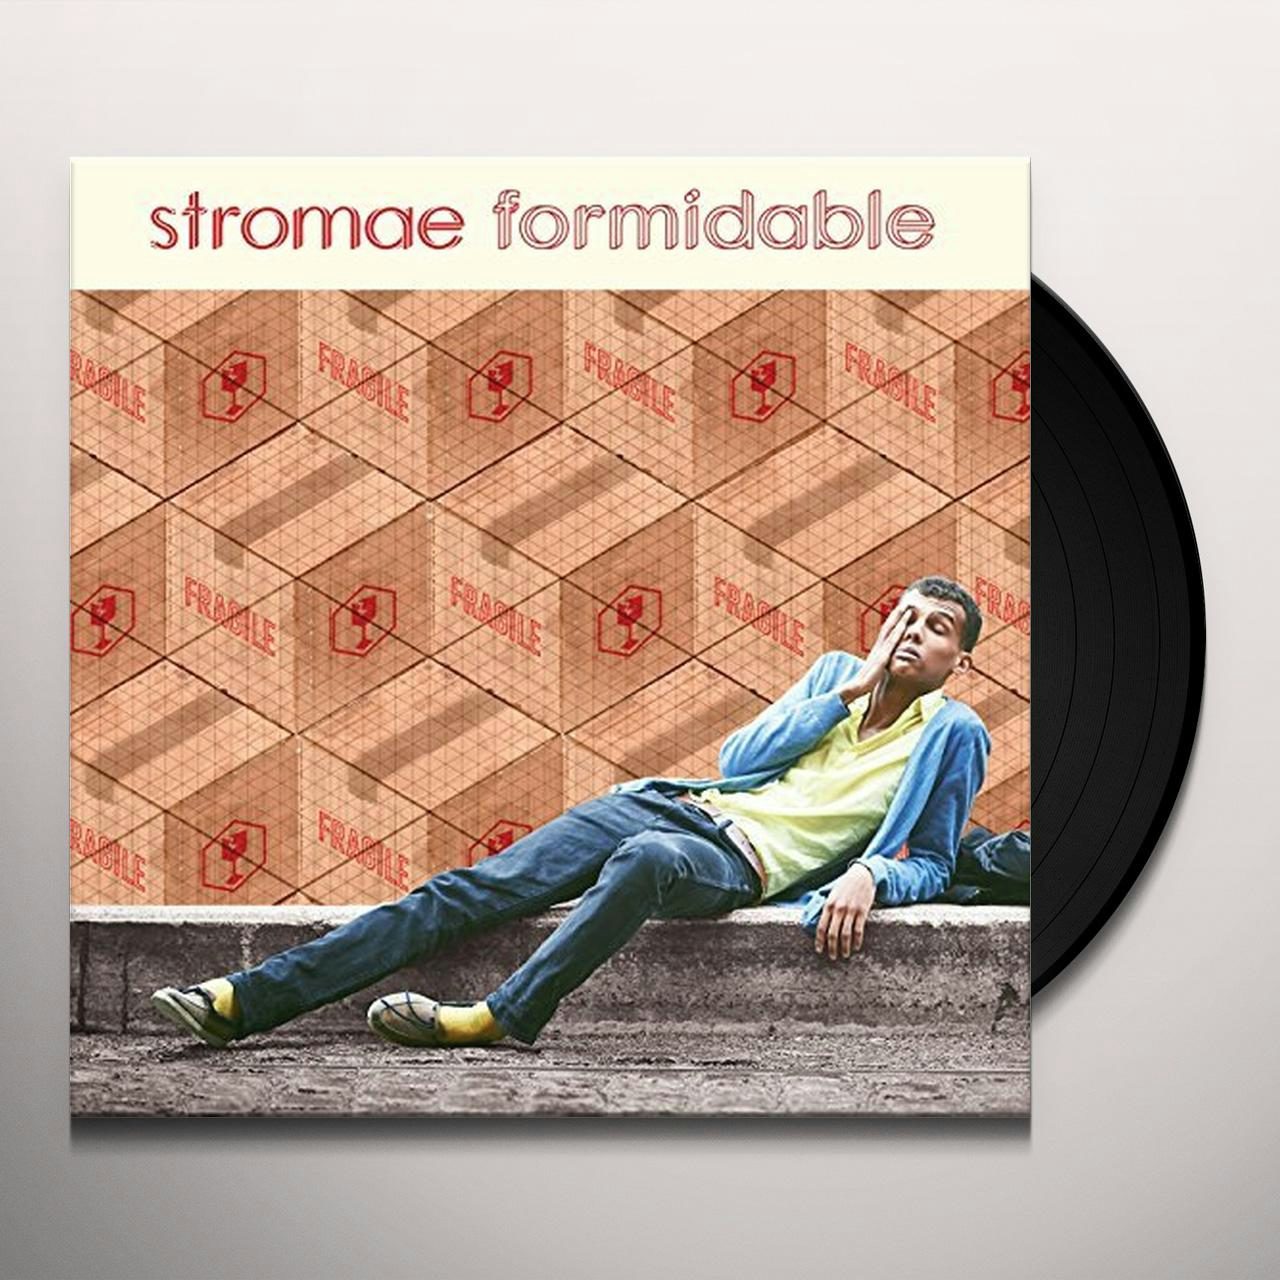 Стромай формидабле перевод. Стромае формидабле. Стромэ Фомидабл. Француз Formidable Stromae. Stromae Vinyl.